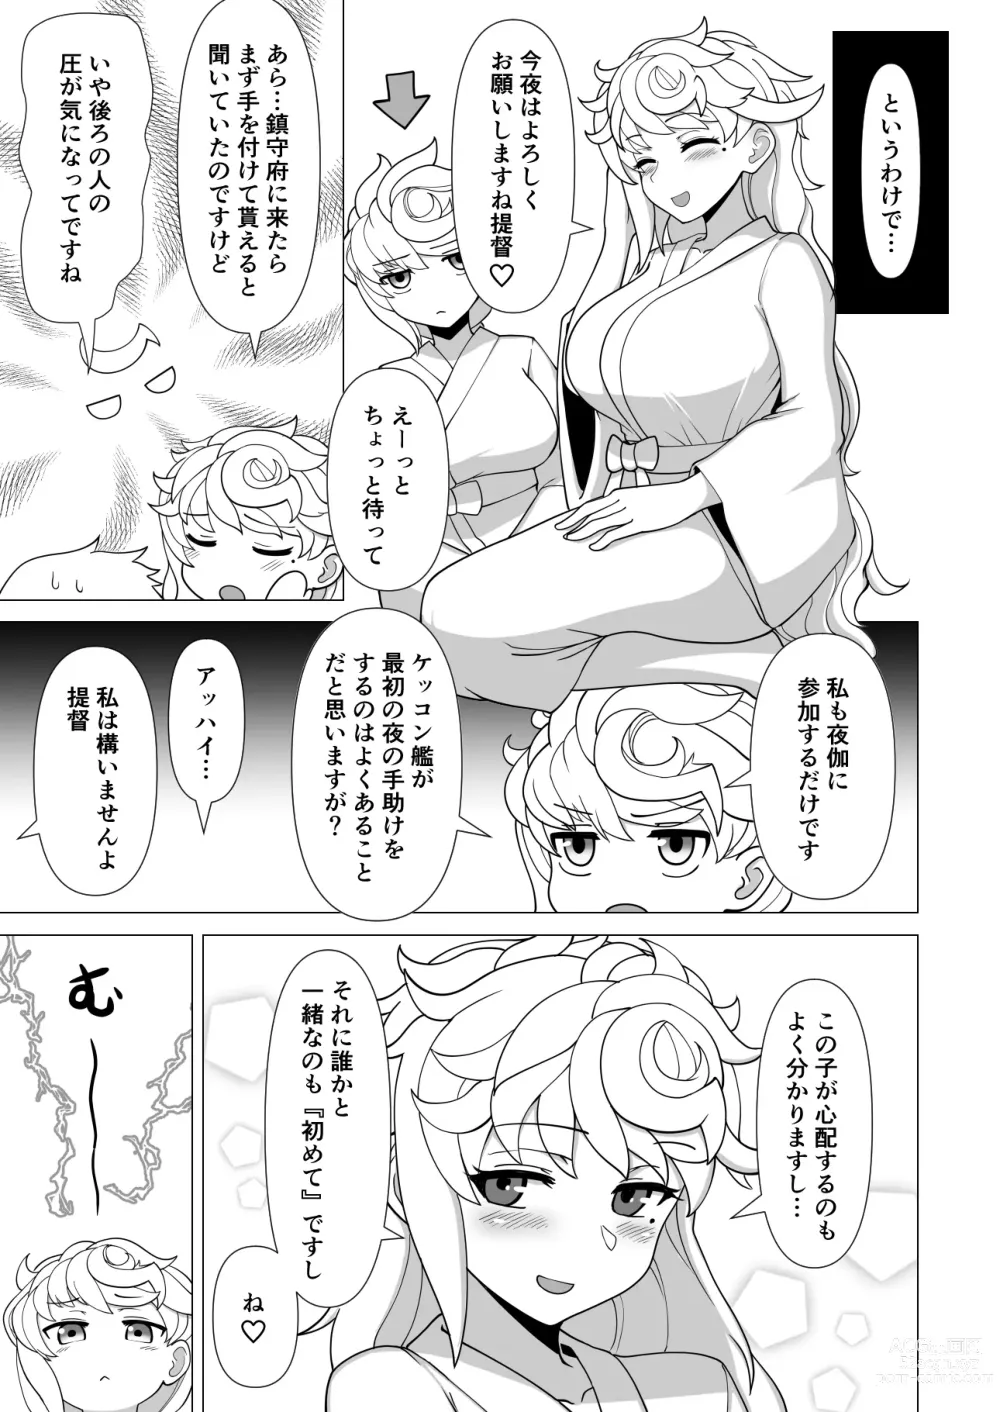 Page 5 of doujinshi Unryuu vs Mama Unryuu